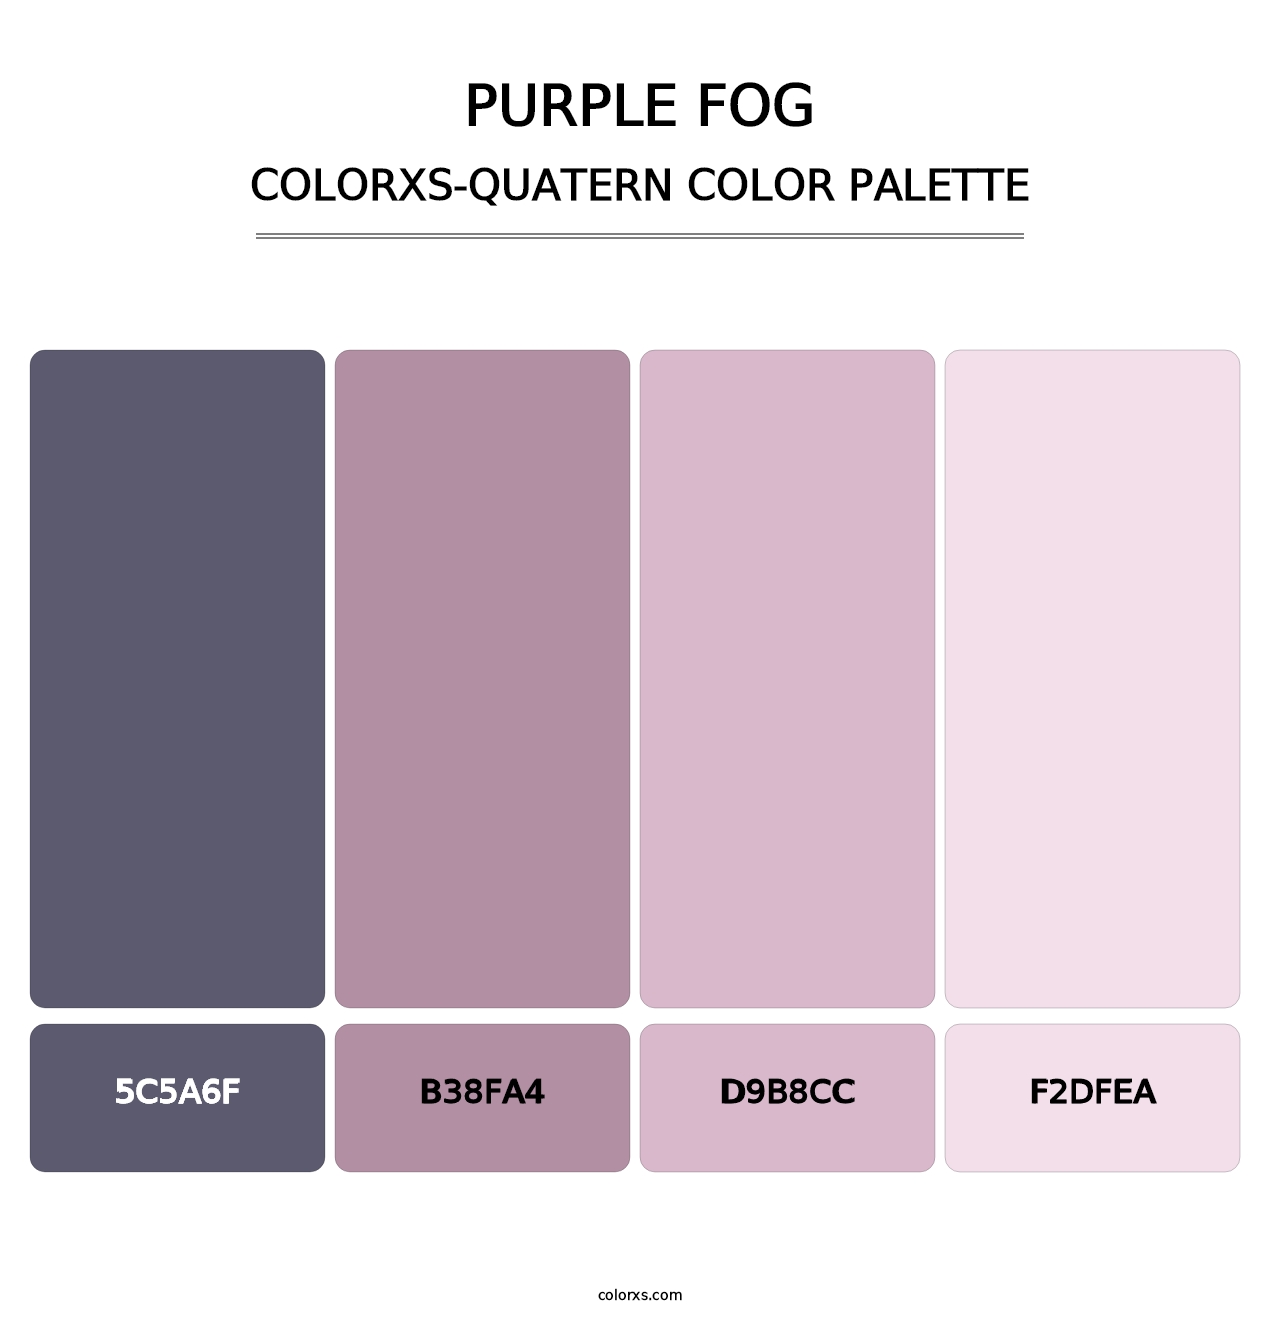 Purple Fog - Colorxs Quatern Palette